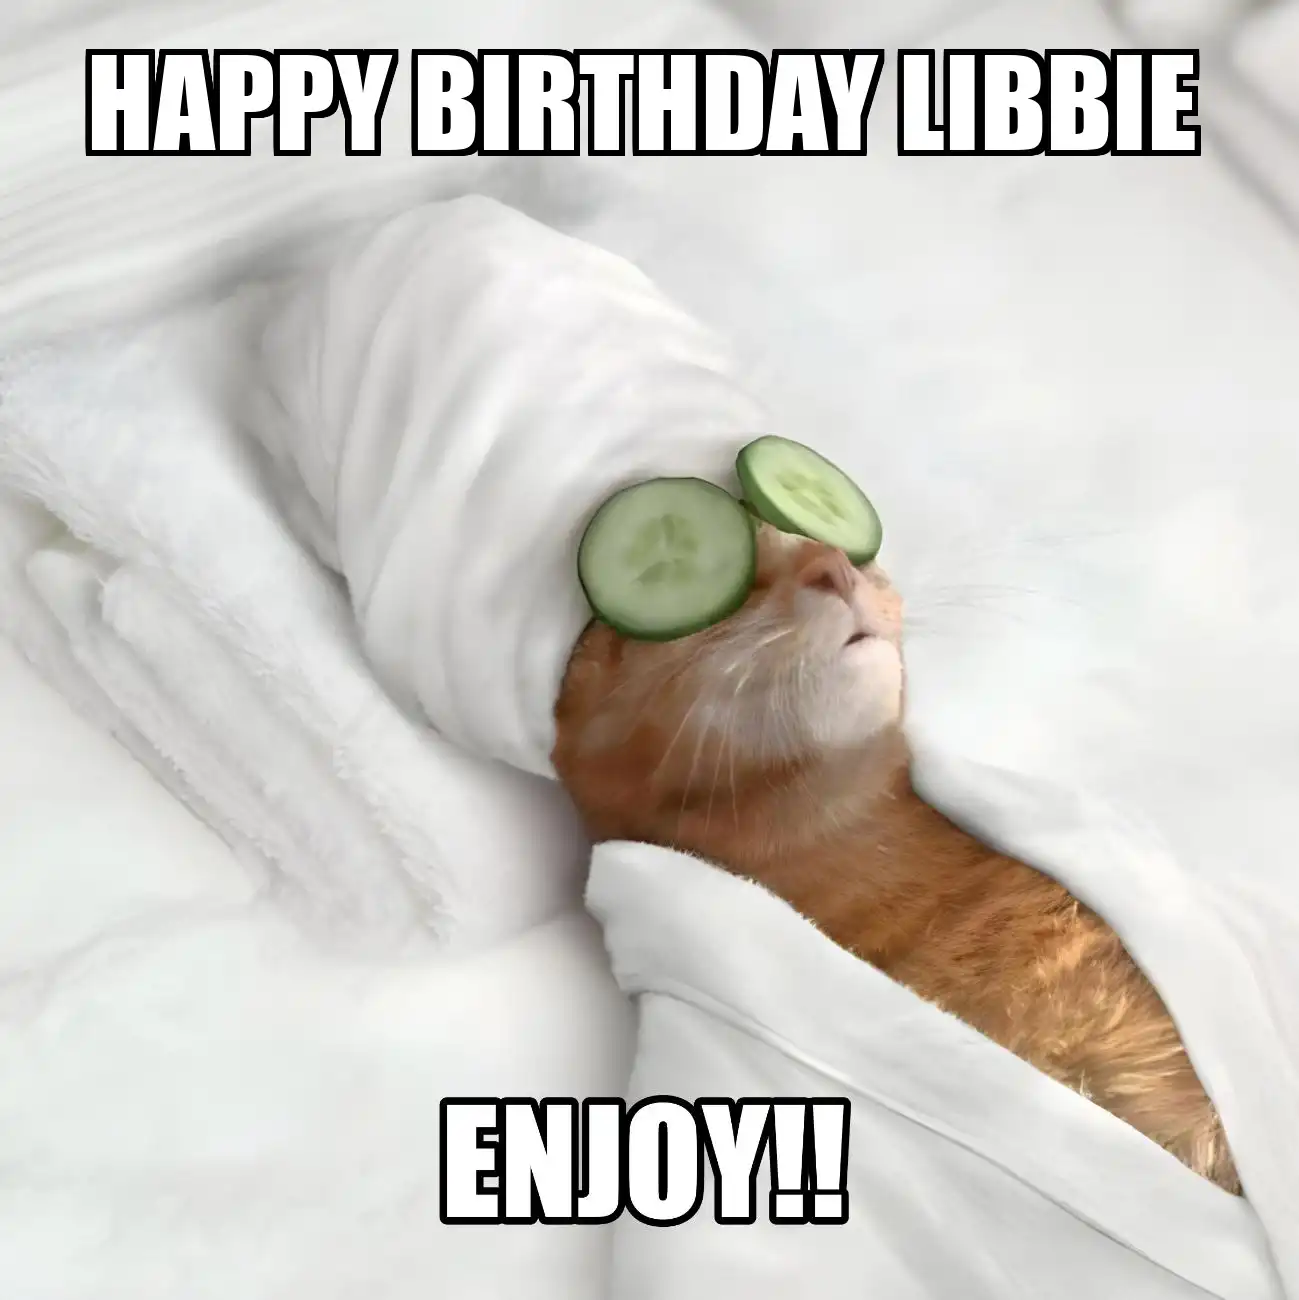 Happy Birthday Libbie Enjoy Cat Meme